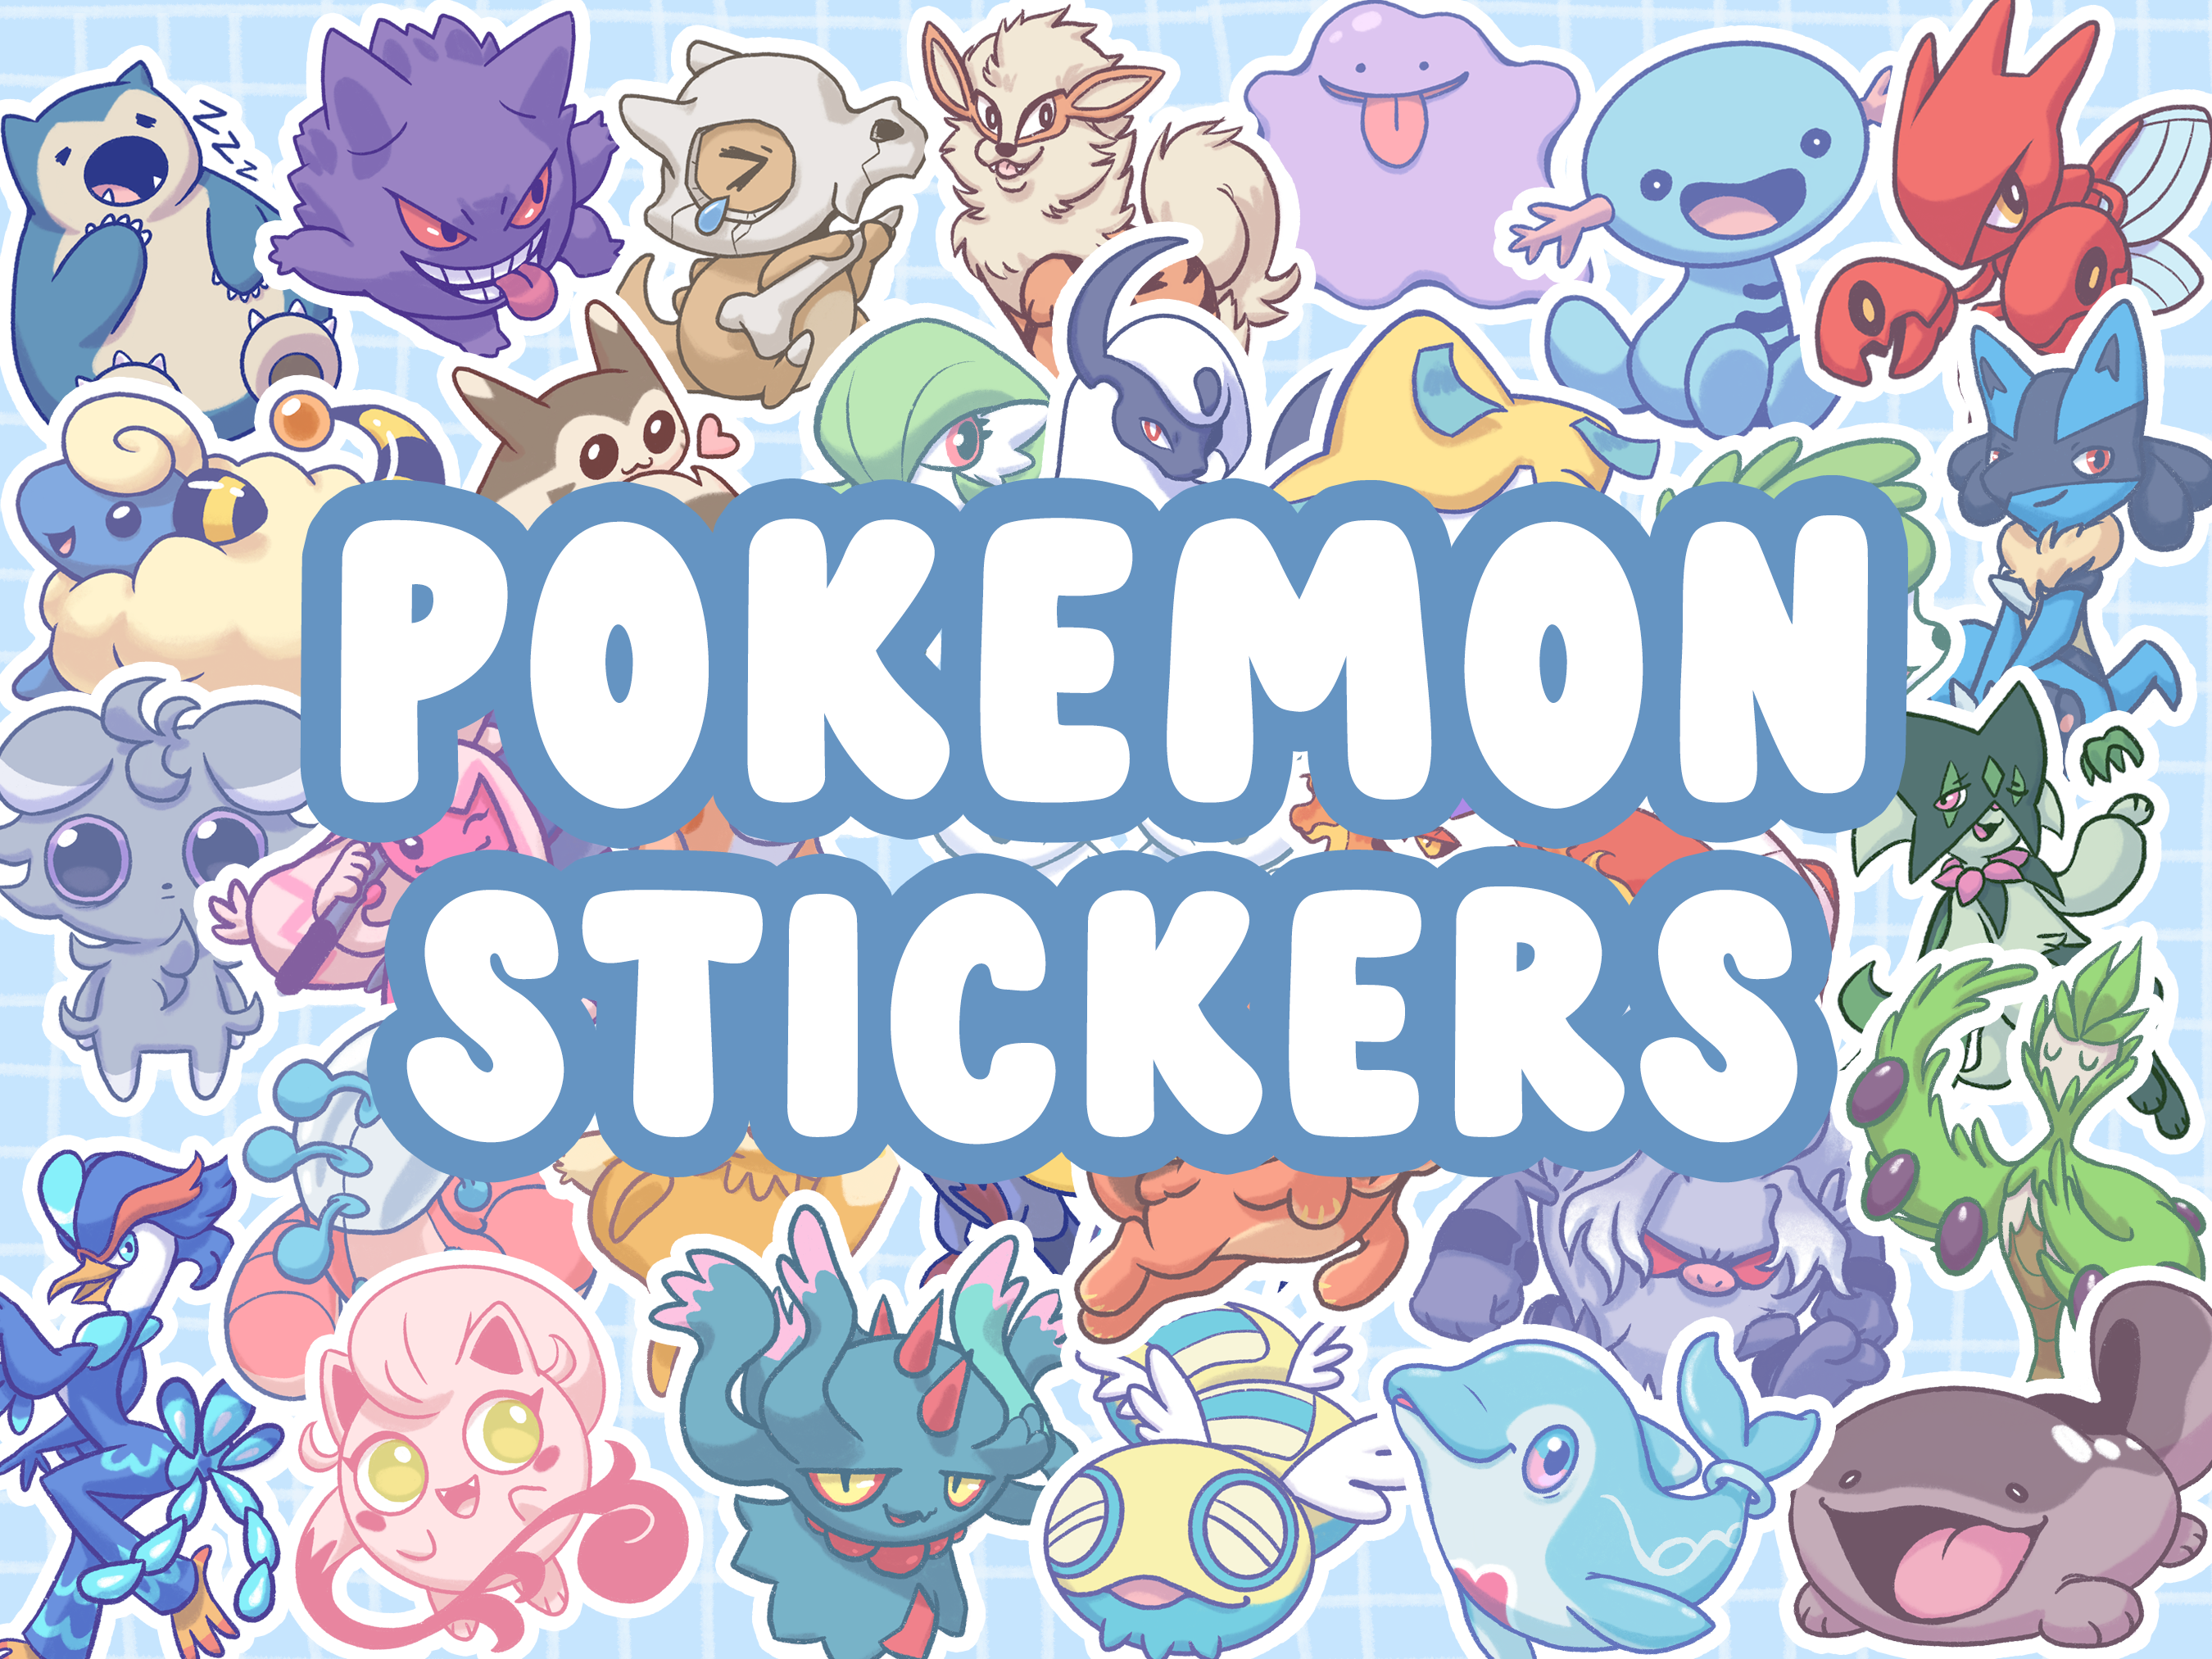 Pokemon XY stickers muraux 25 pièces